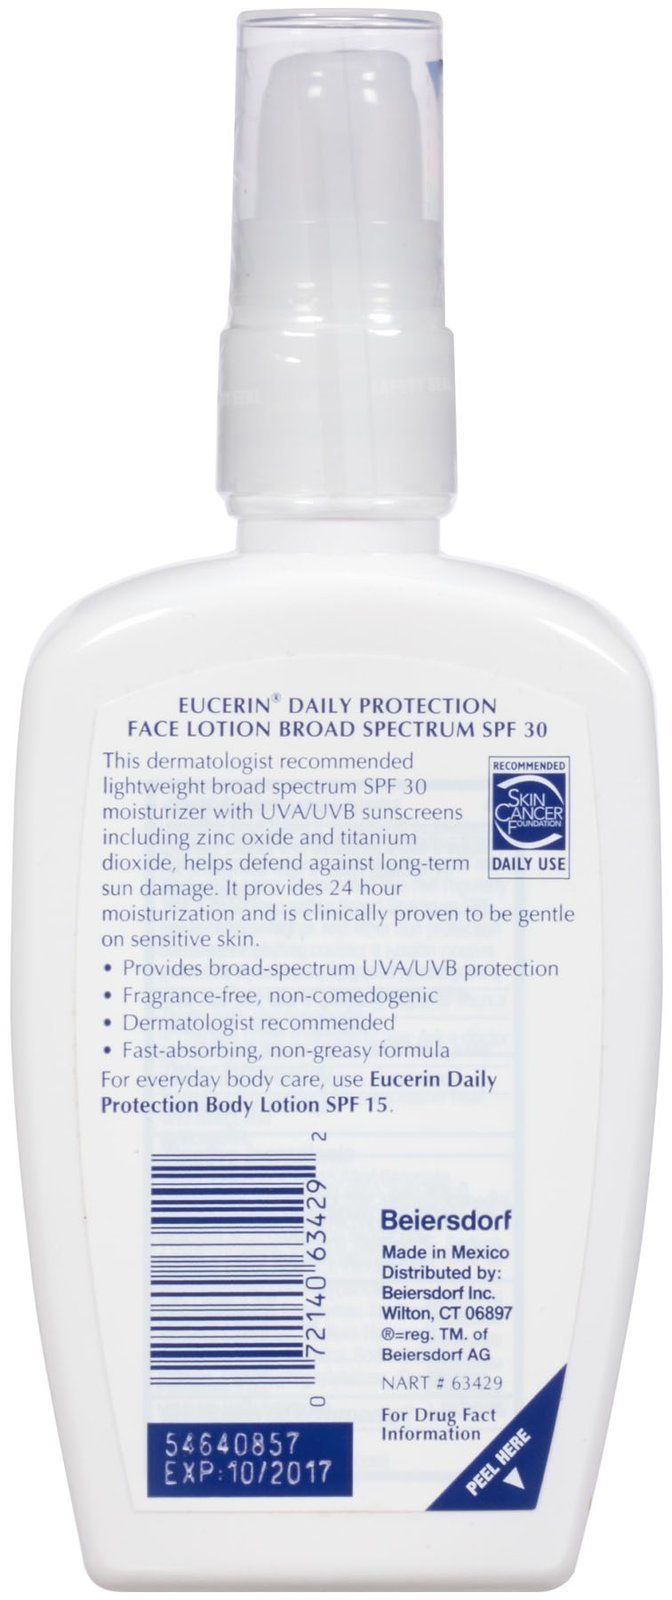 Eucerin Daily Protection Face Lotion SPF 30 4 oz